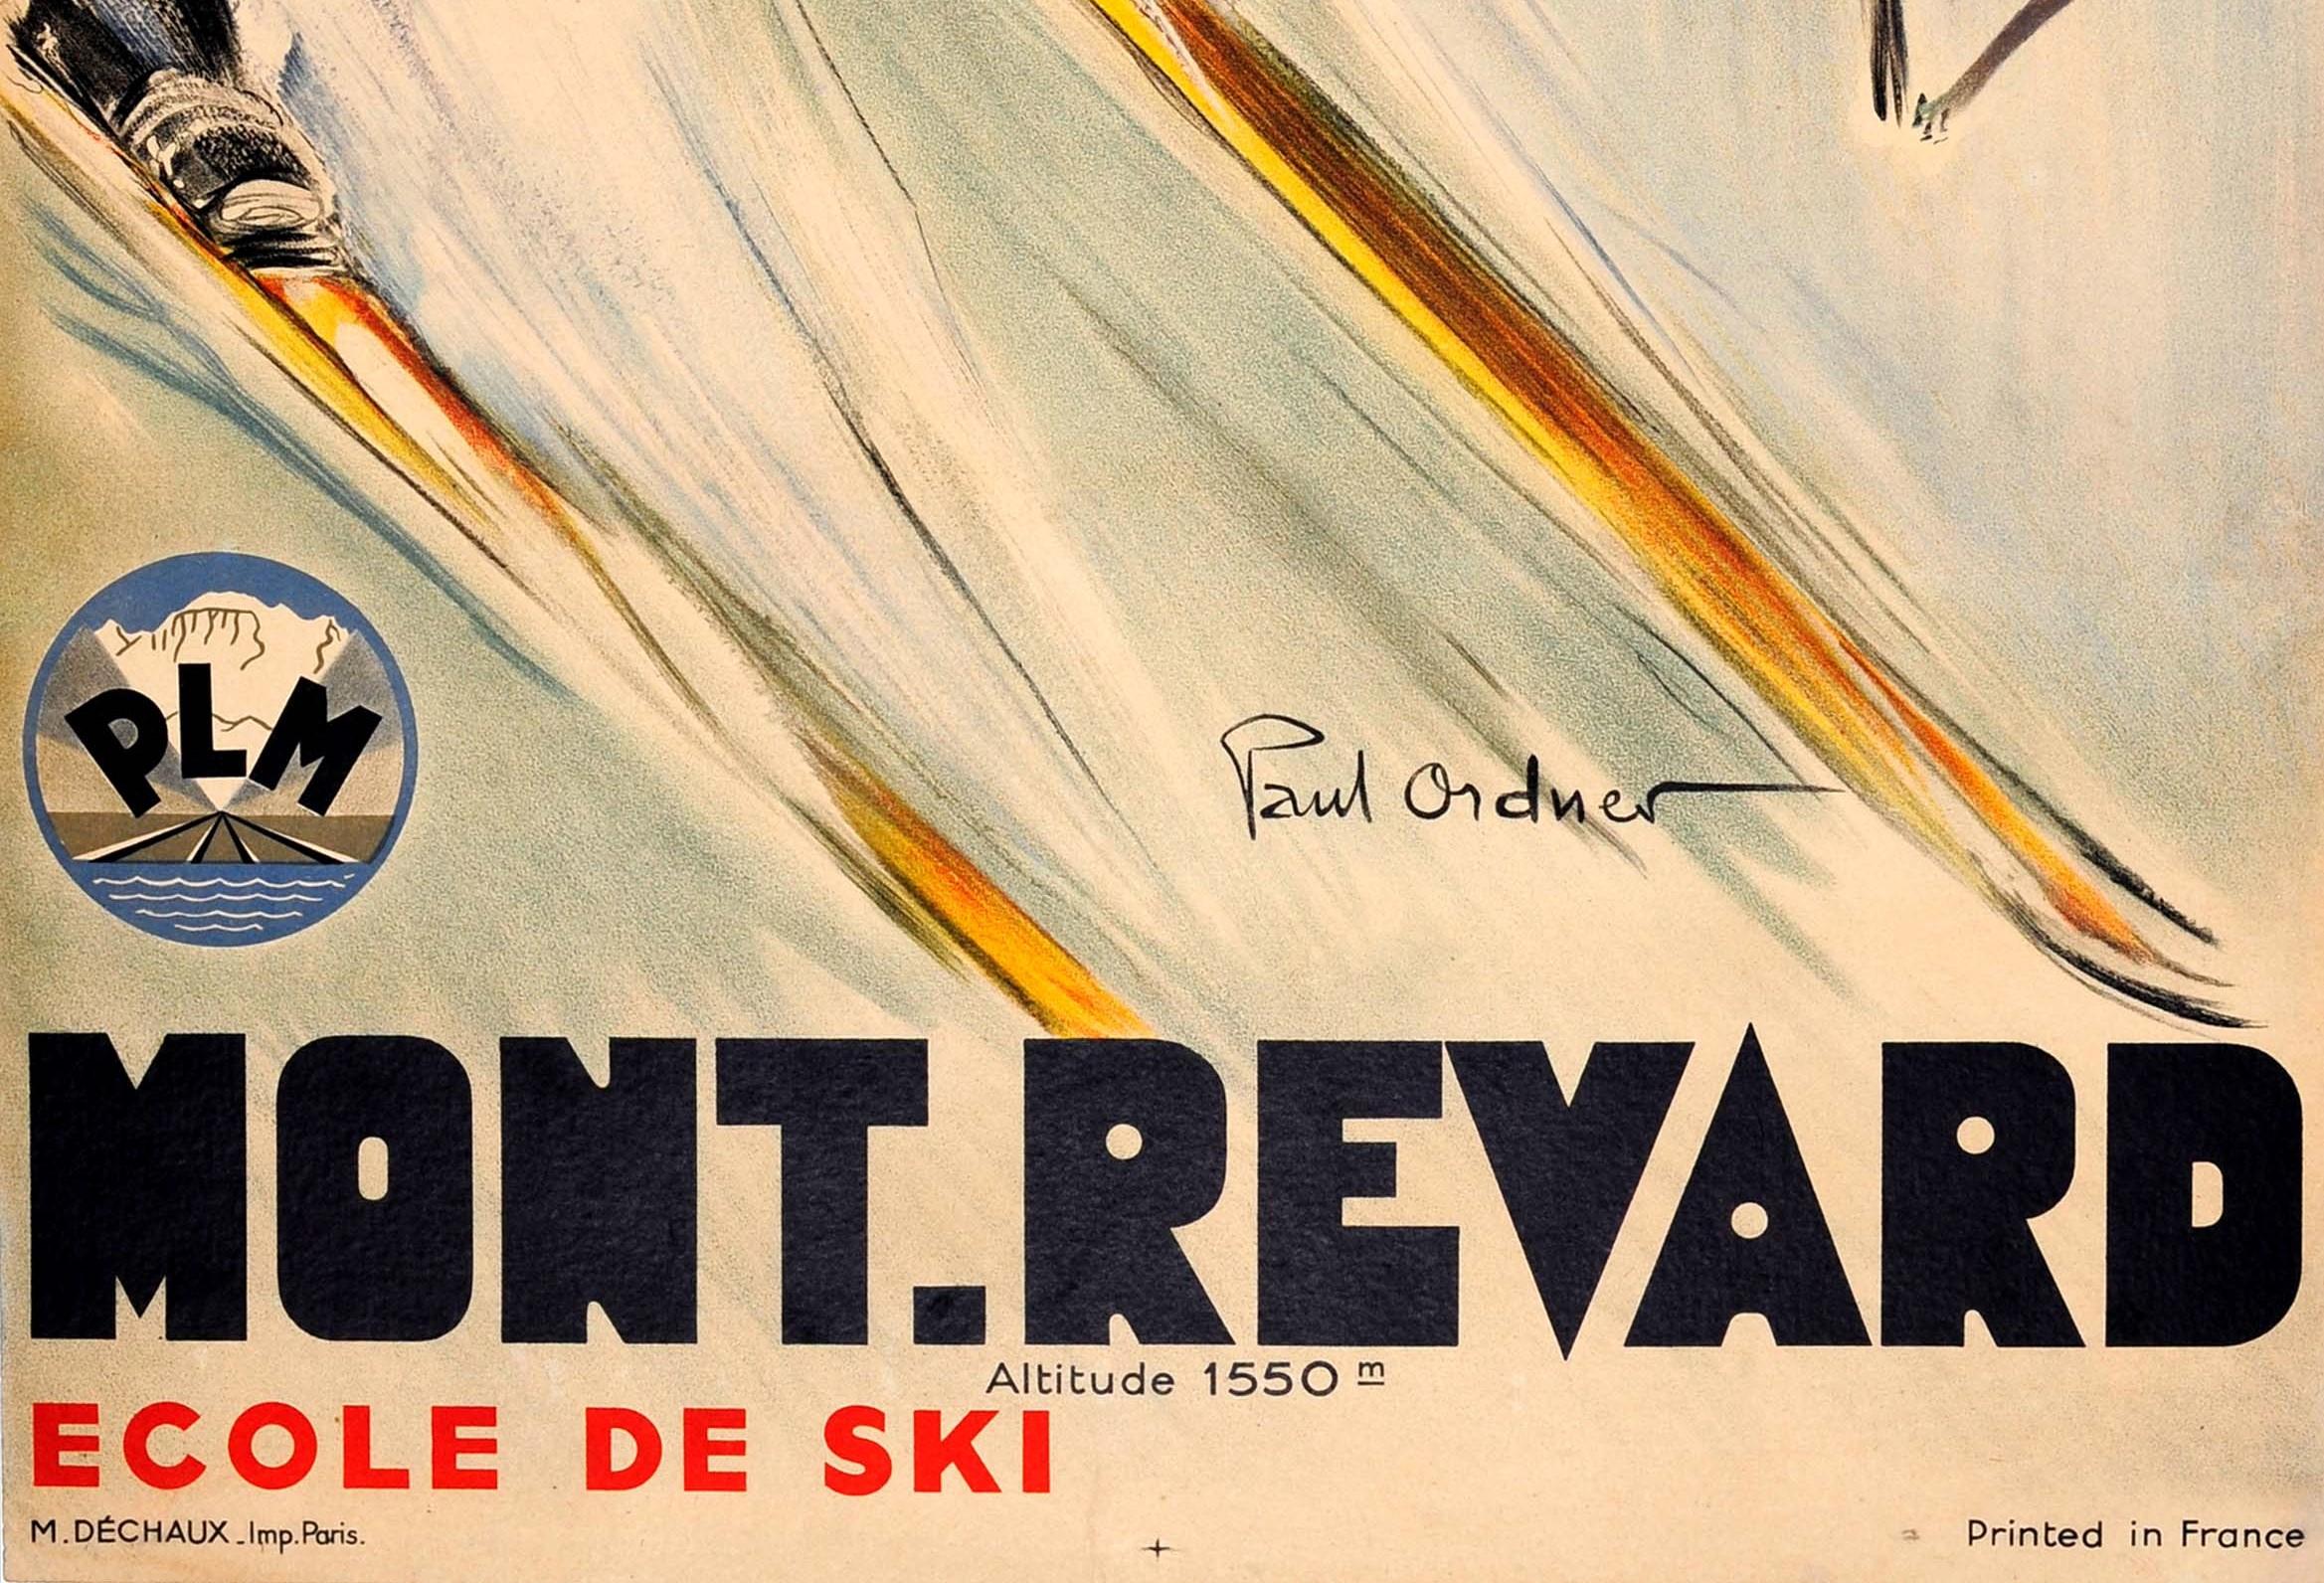 Original Vintage 1930s Skiing Poster by Paul Ordner for Mont Revard France PLM 2